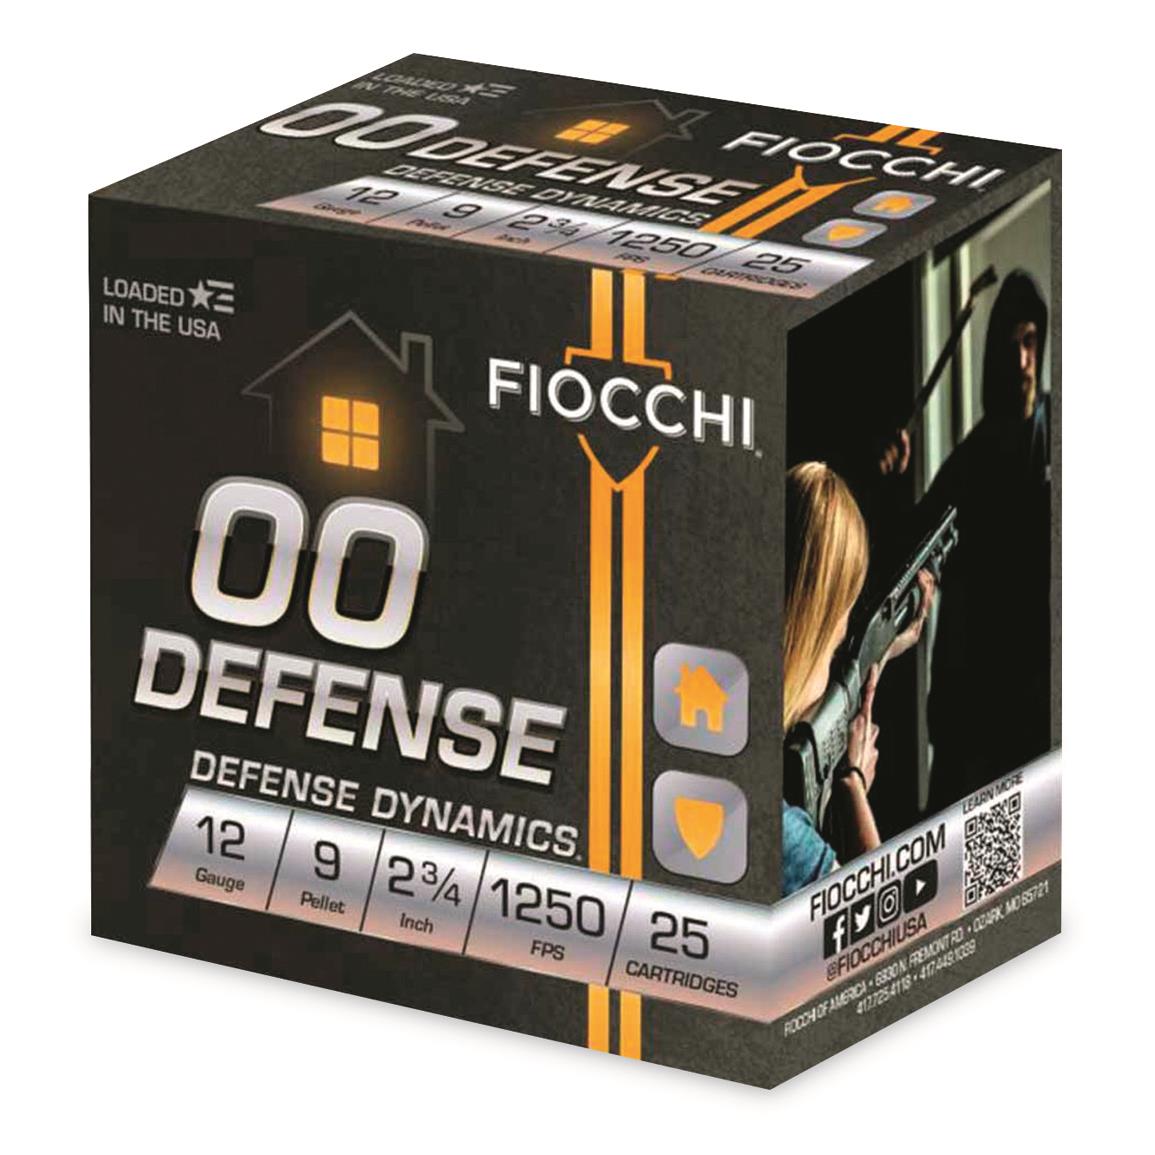 Fiocchi Defense Dynamics, 12 Gauge, 2 3/4", 00 Buckshot, 25 Rounds